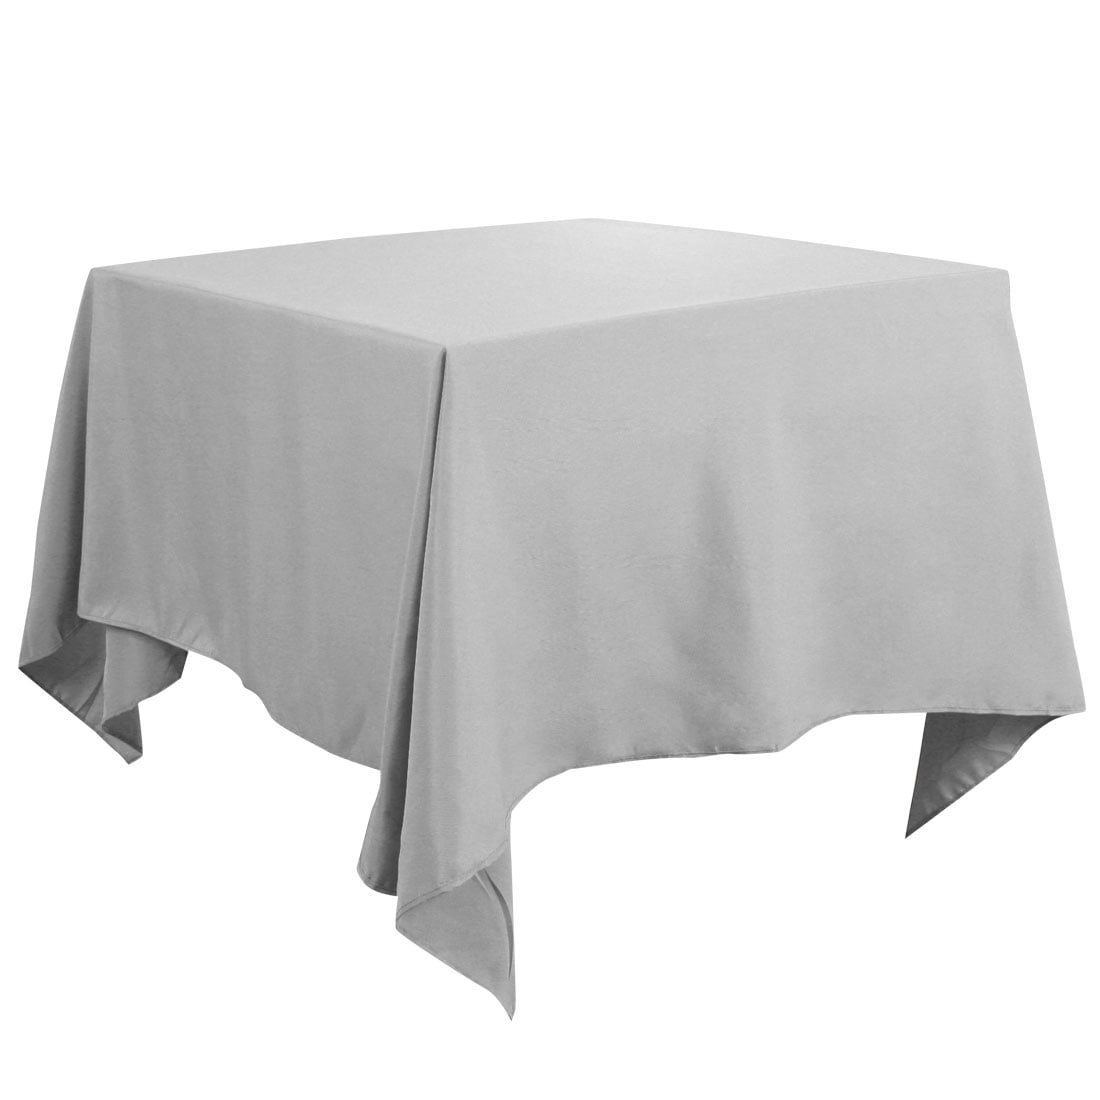 1 pc 72"x72" Square Cloth Fabric Linen Tablecloth Black Wedding yu